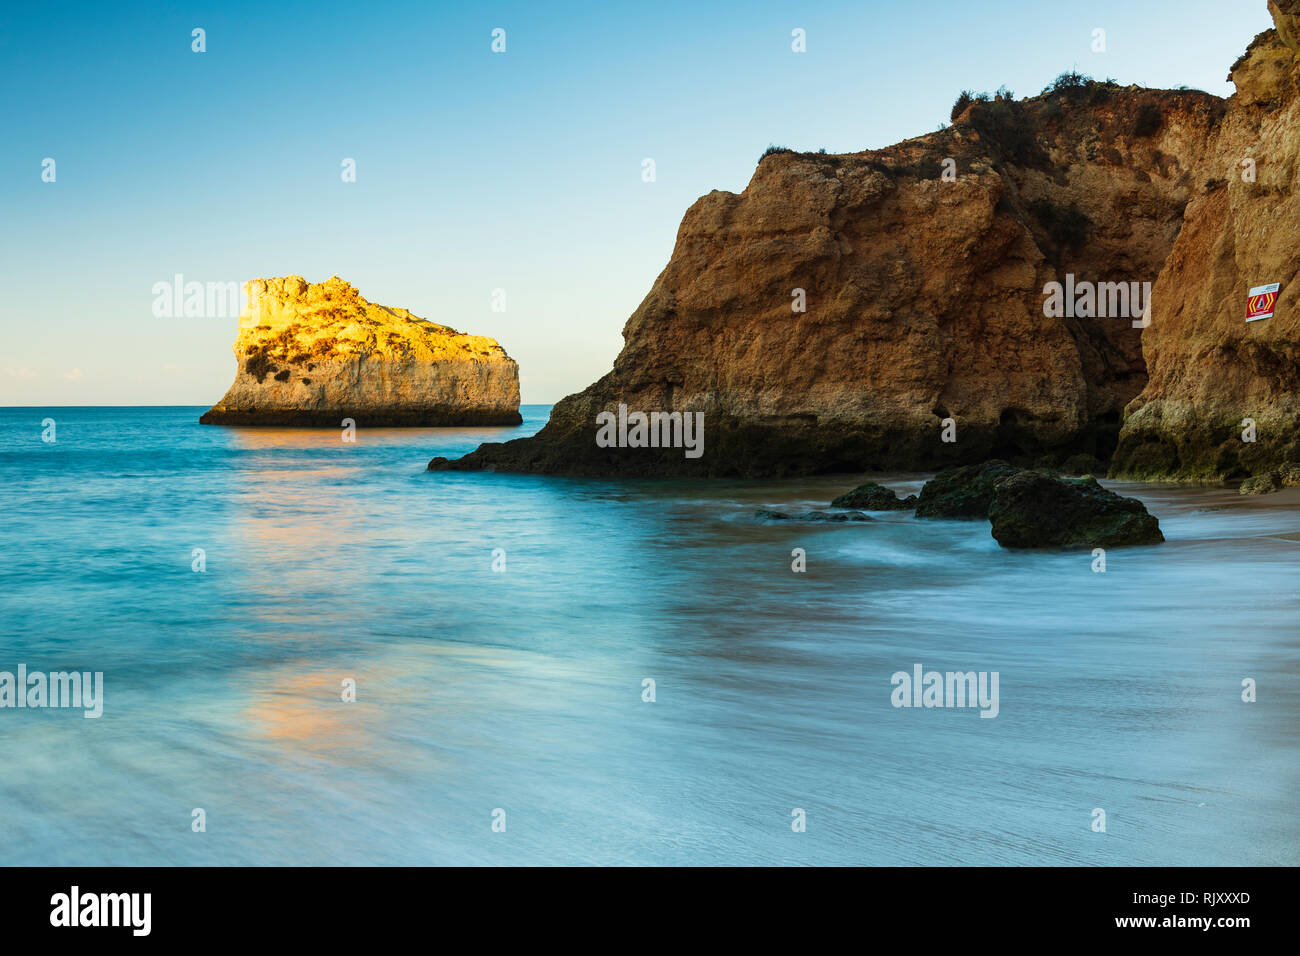 View from sandy beach of sunlight illuminating rock formation, Alvor, Algarve, Portugal, Europe Stock Photo